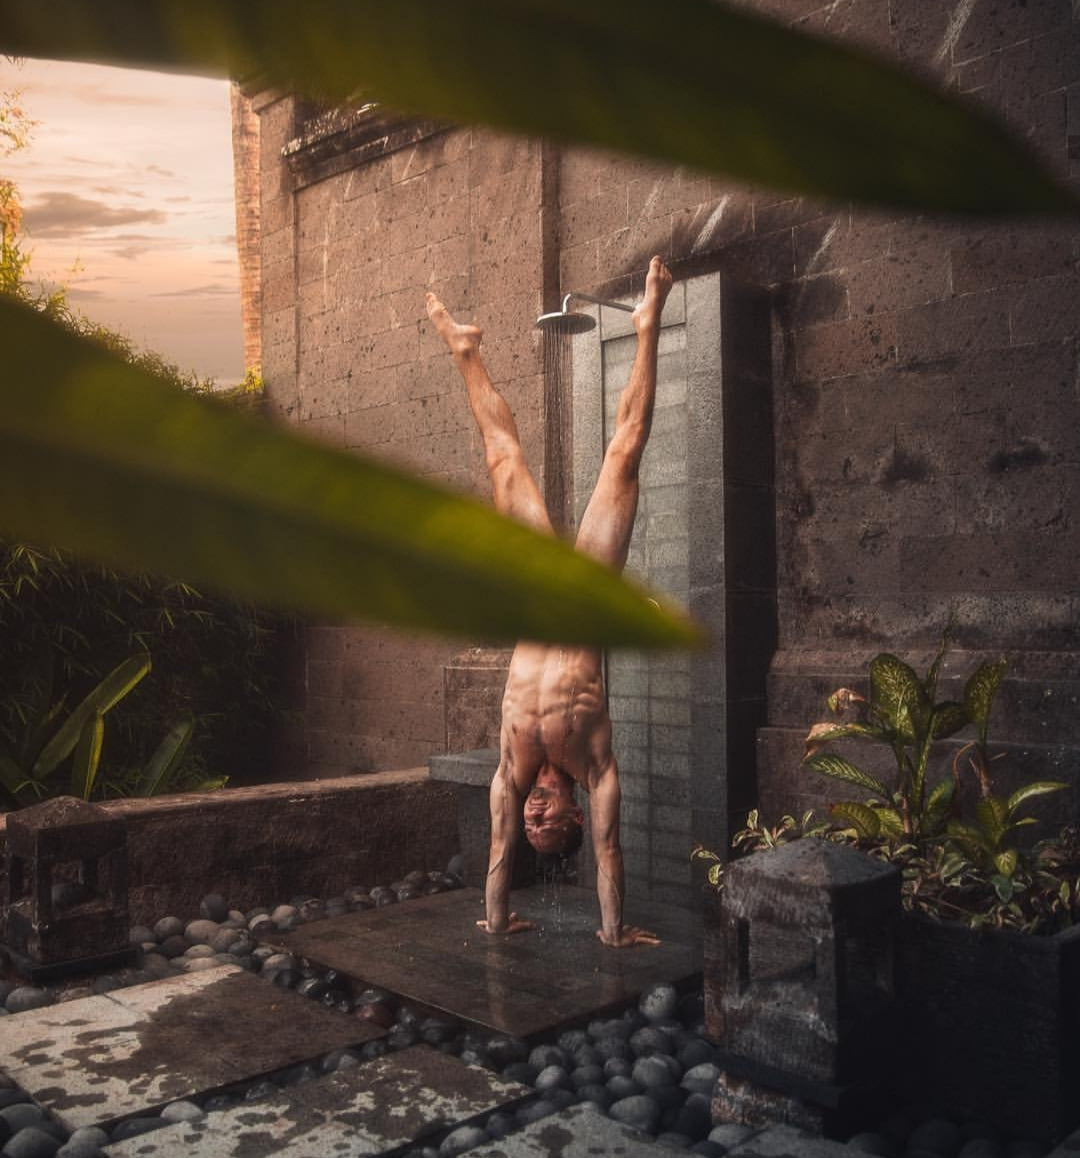 Man doing handstand under a cold shower